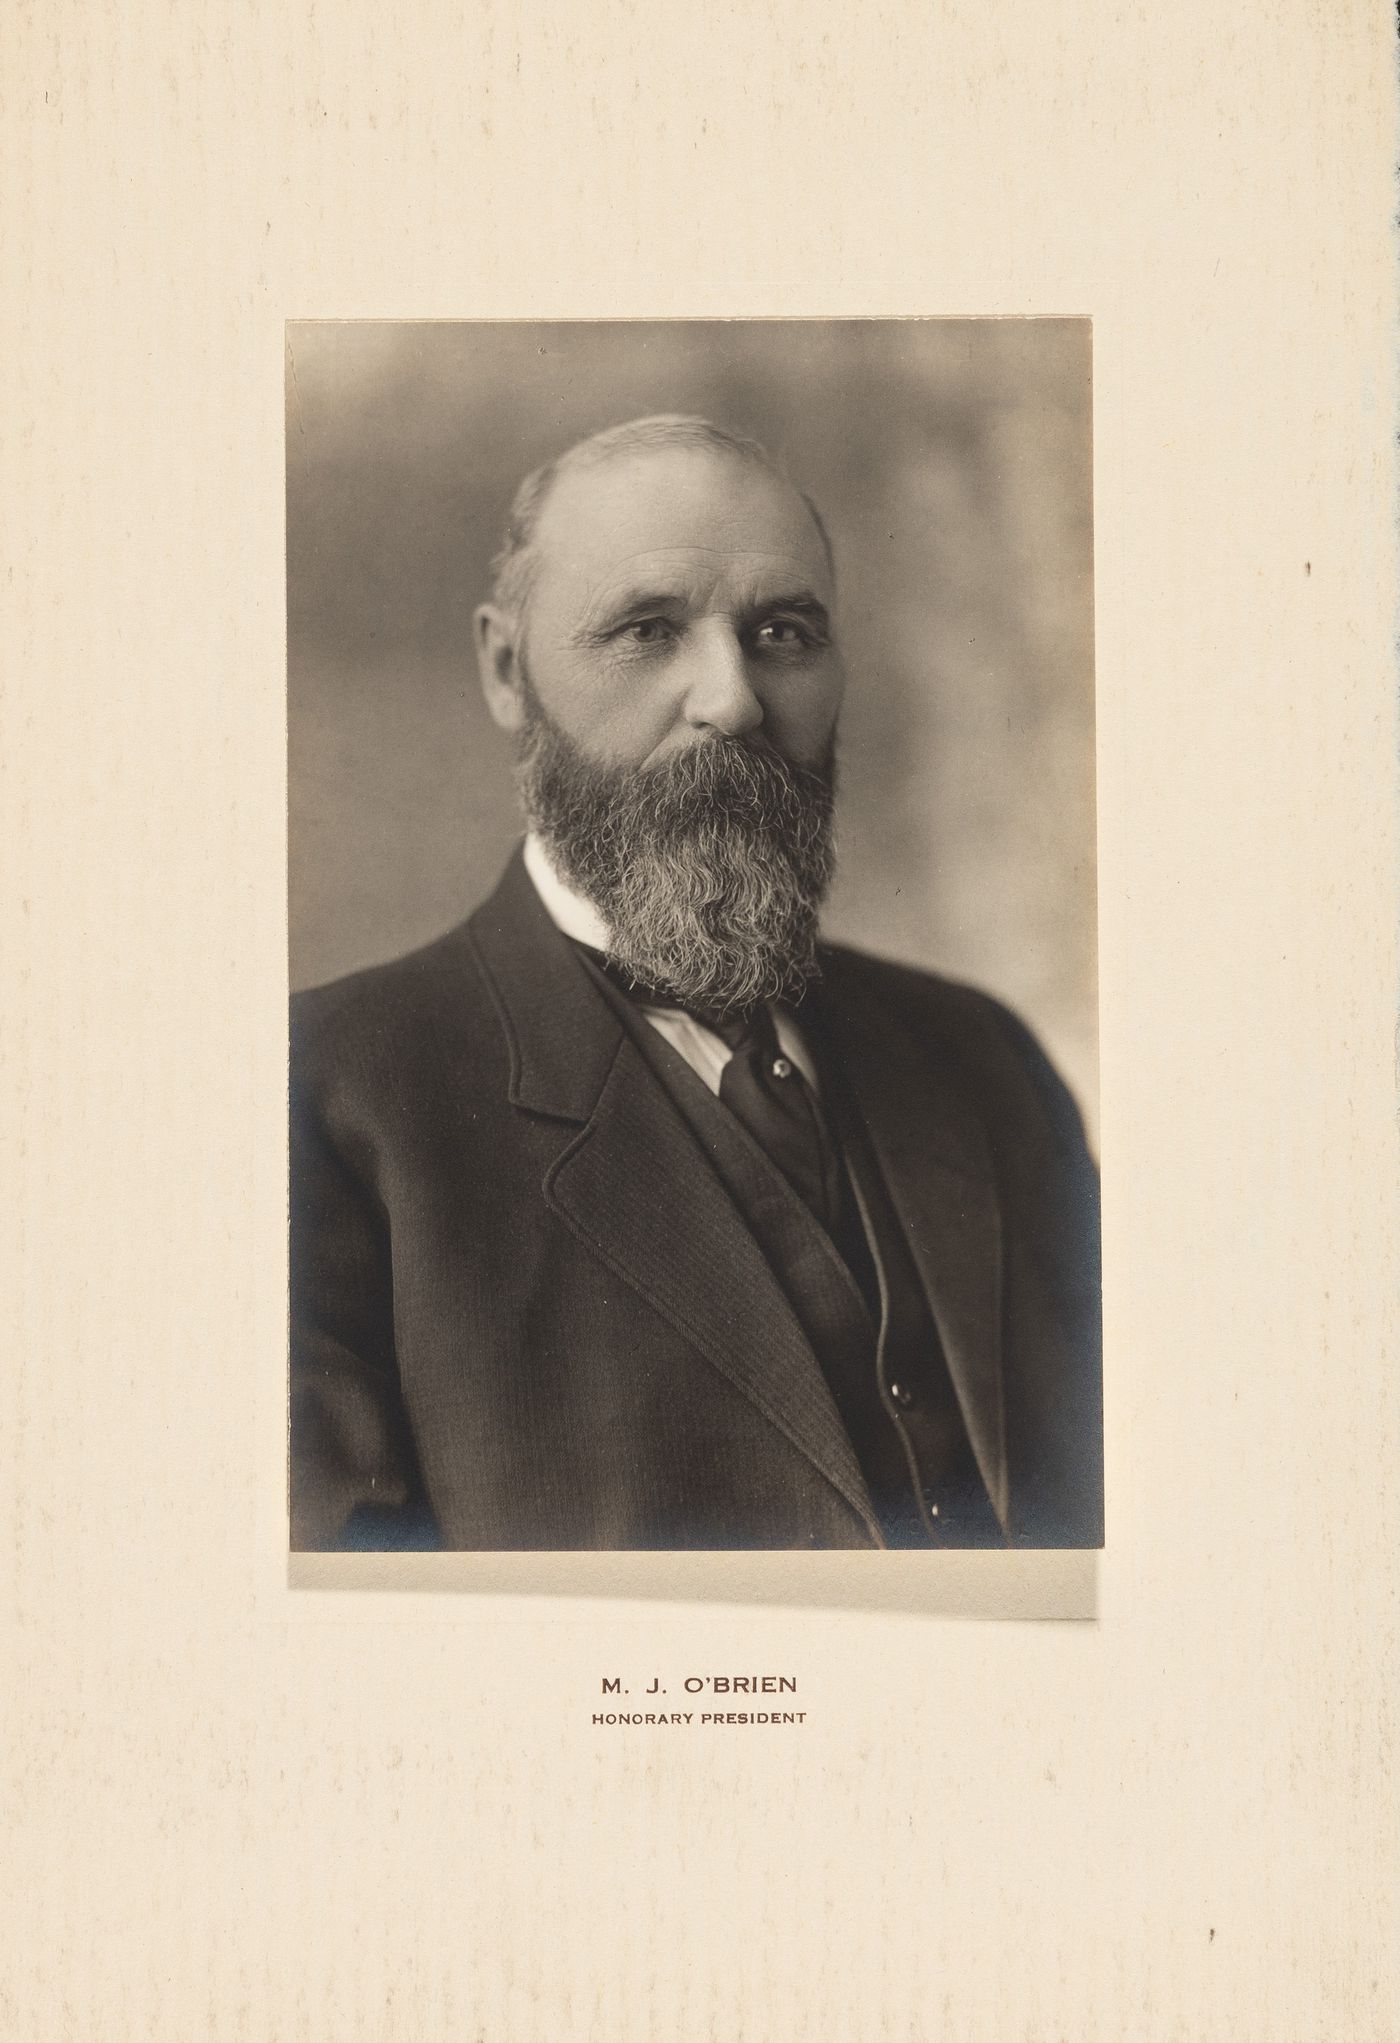 Portrait of M.J. O'Brien, Honorary President, Energite Explosives Company